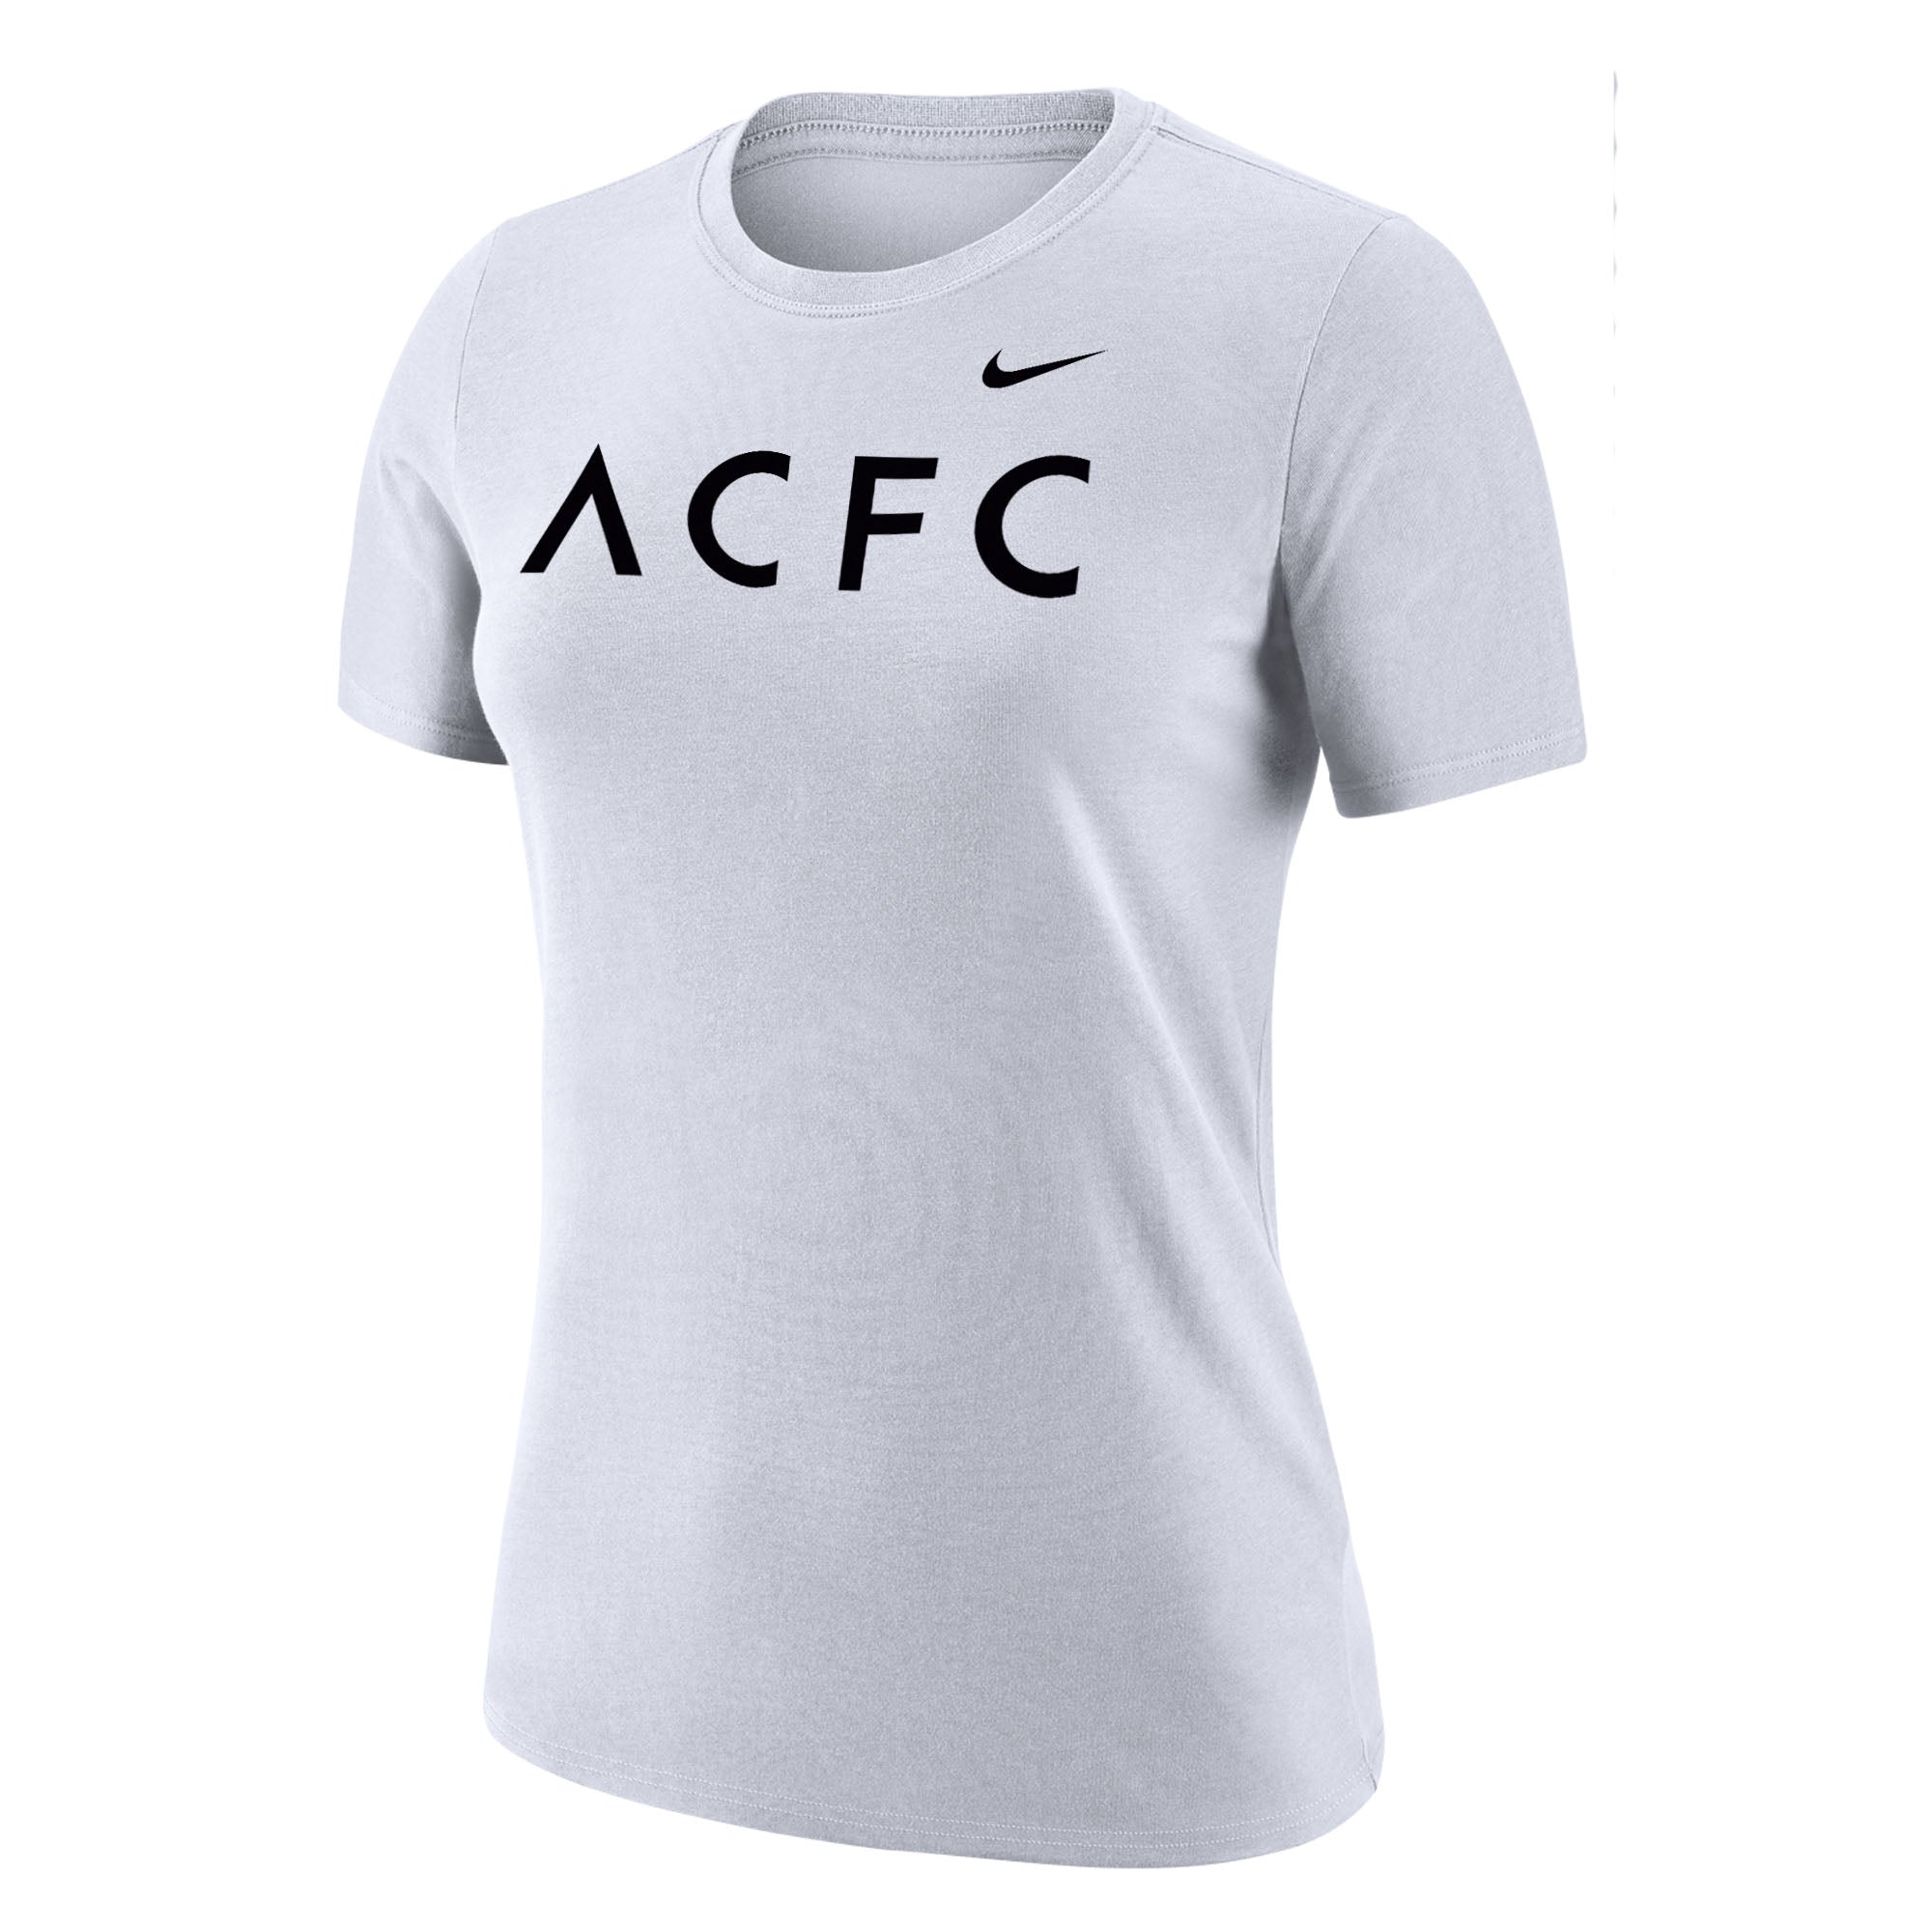 ACFC Nike Women's White Dri-FIT Short Sleeve T-Shirt